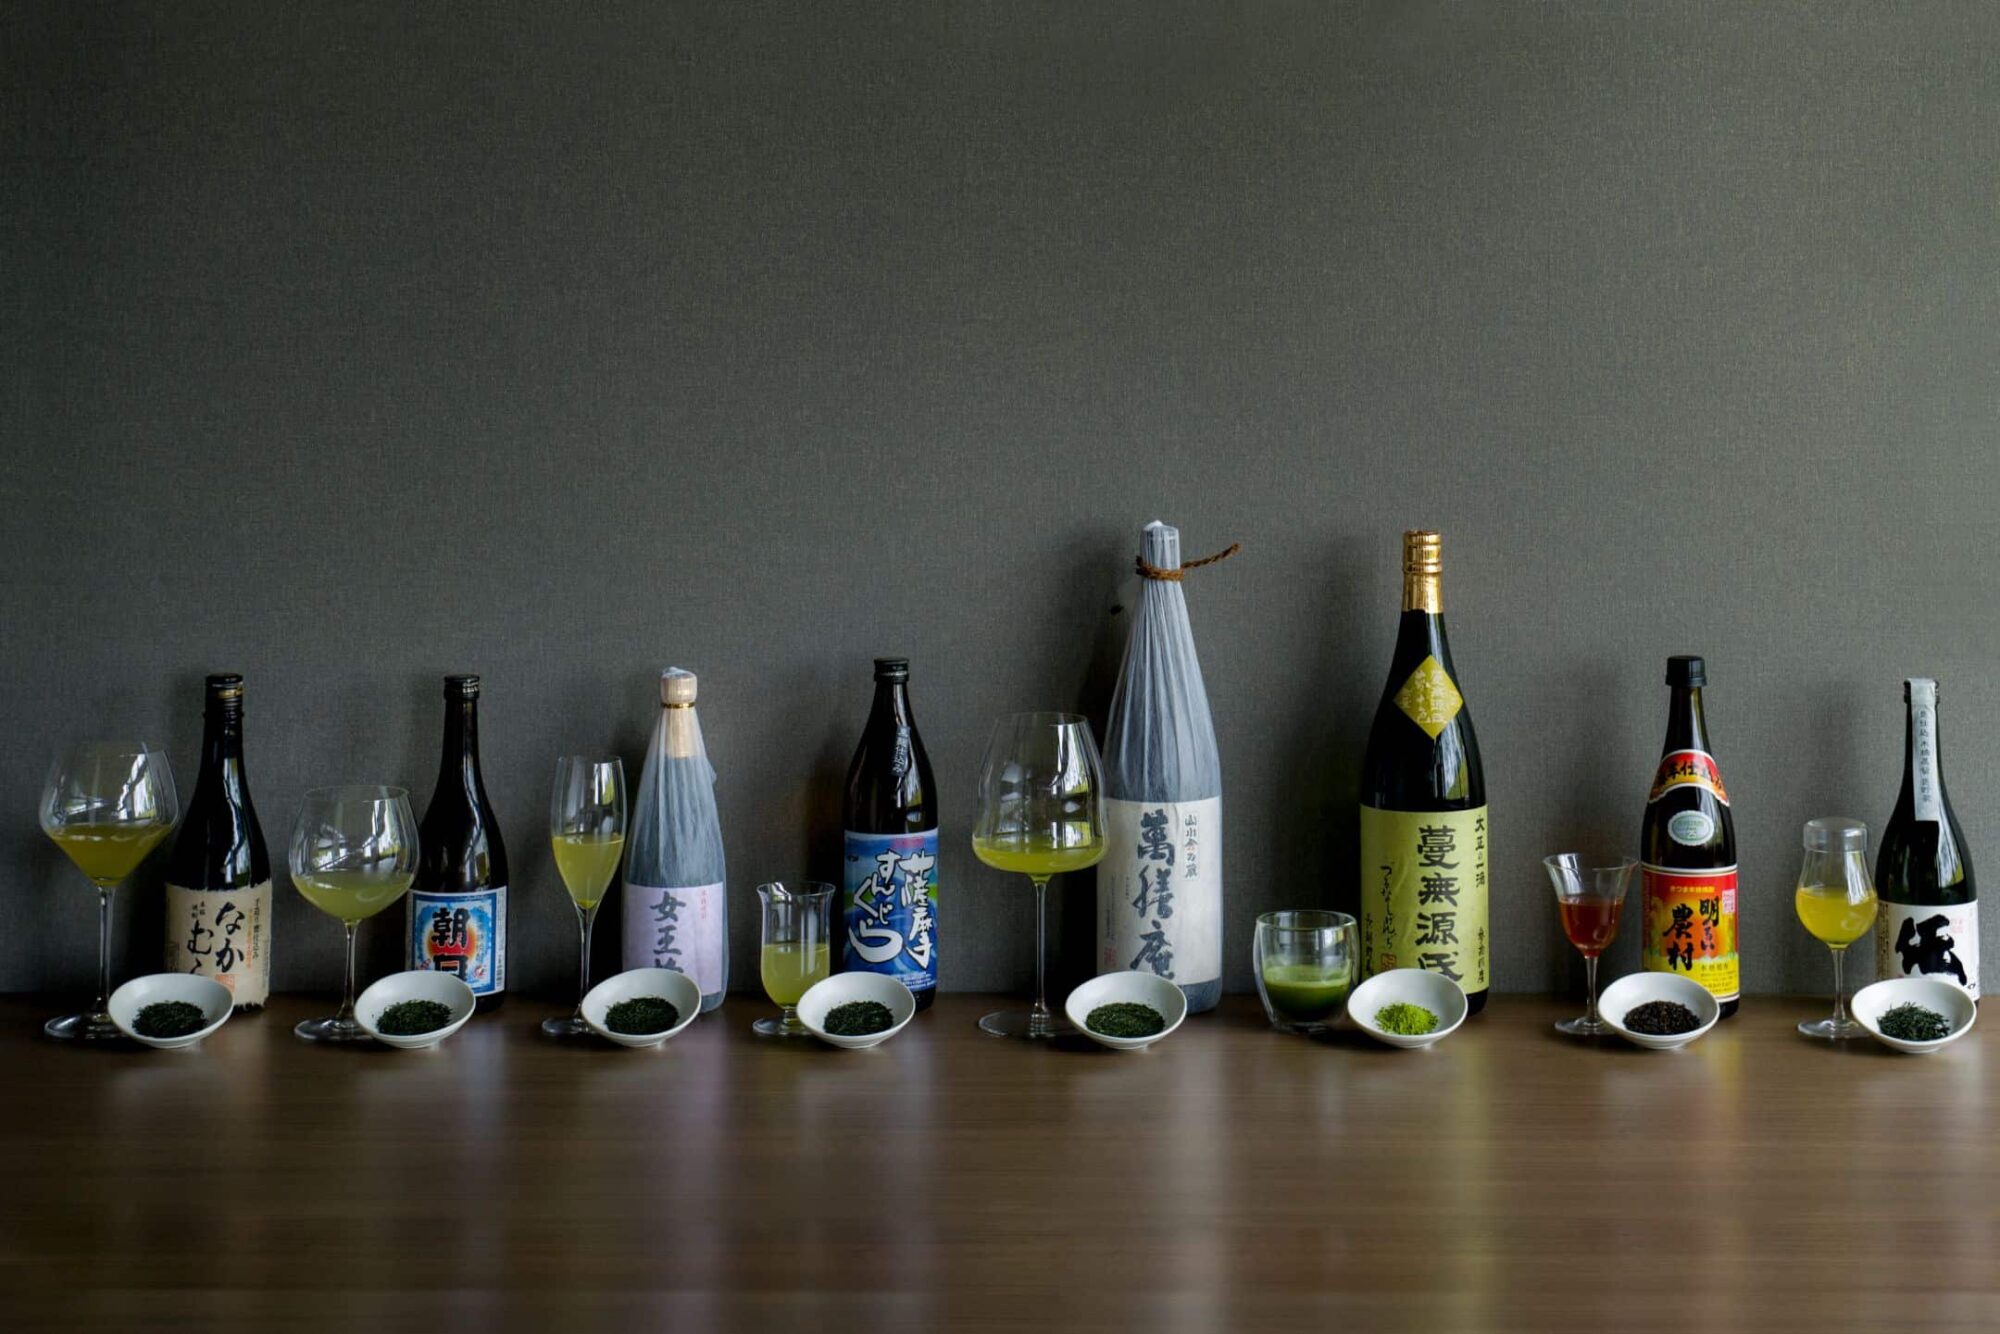 Eight kinds of Kirishima tea are combined with shochu produced by four shochu breweries in Kirishima City